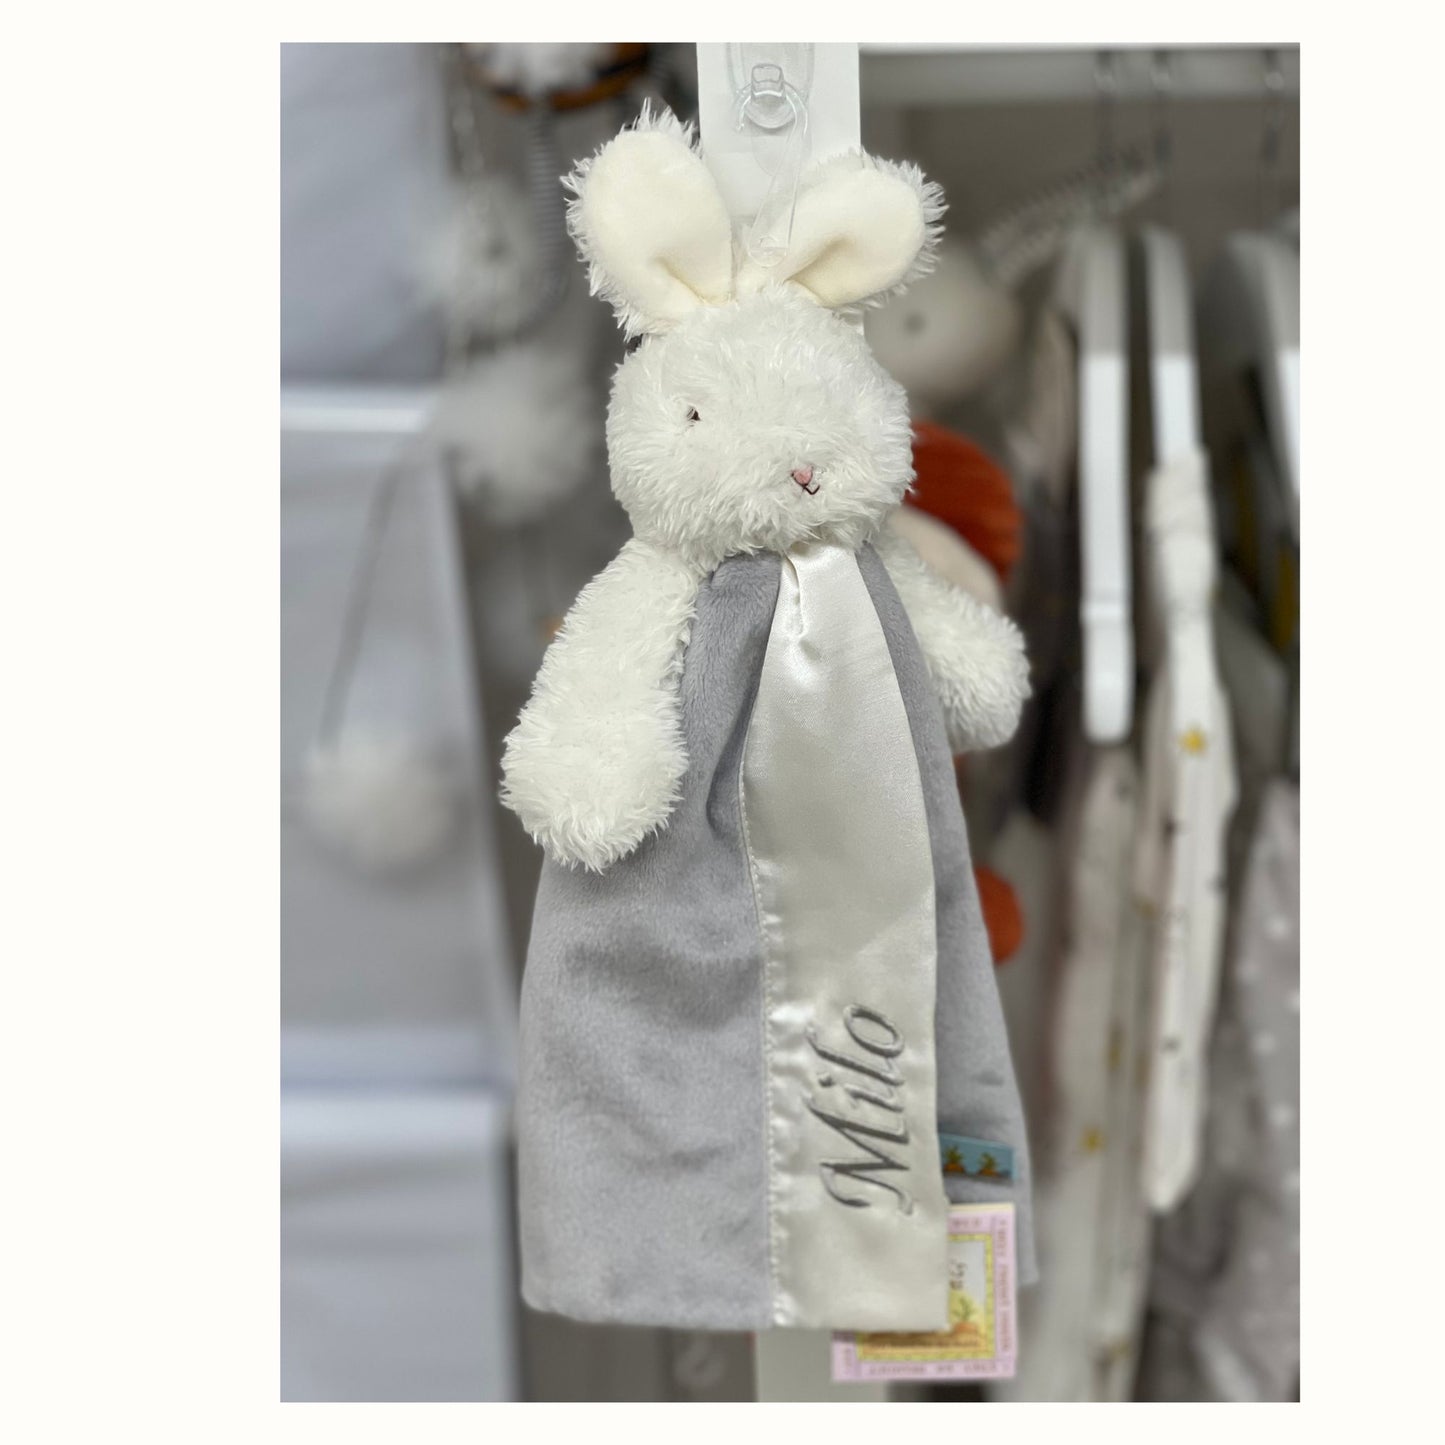 Artesania Granlei Grey & White Bloom Bunny Knitted Gift Set